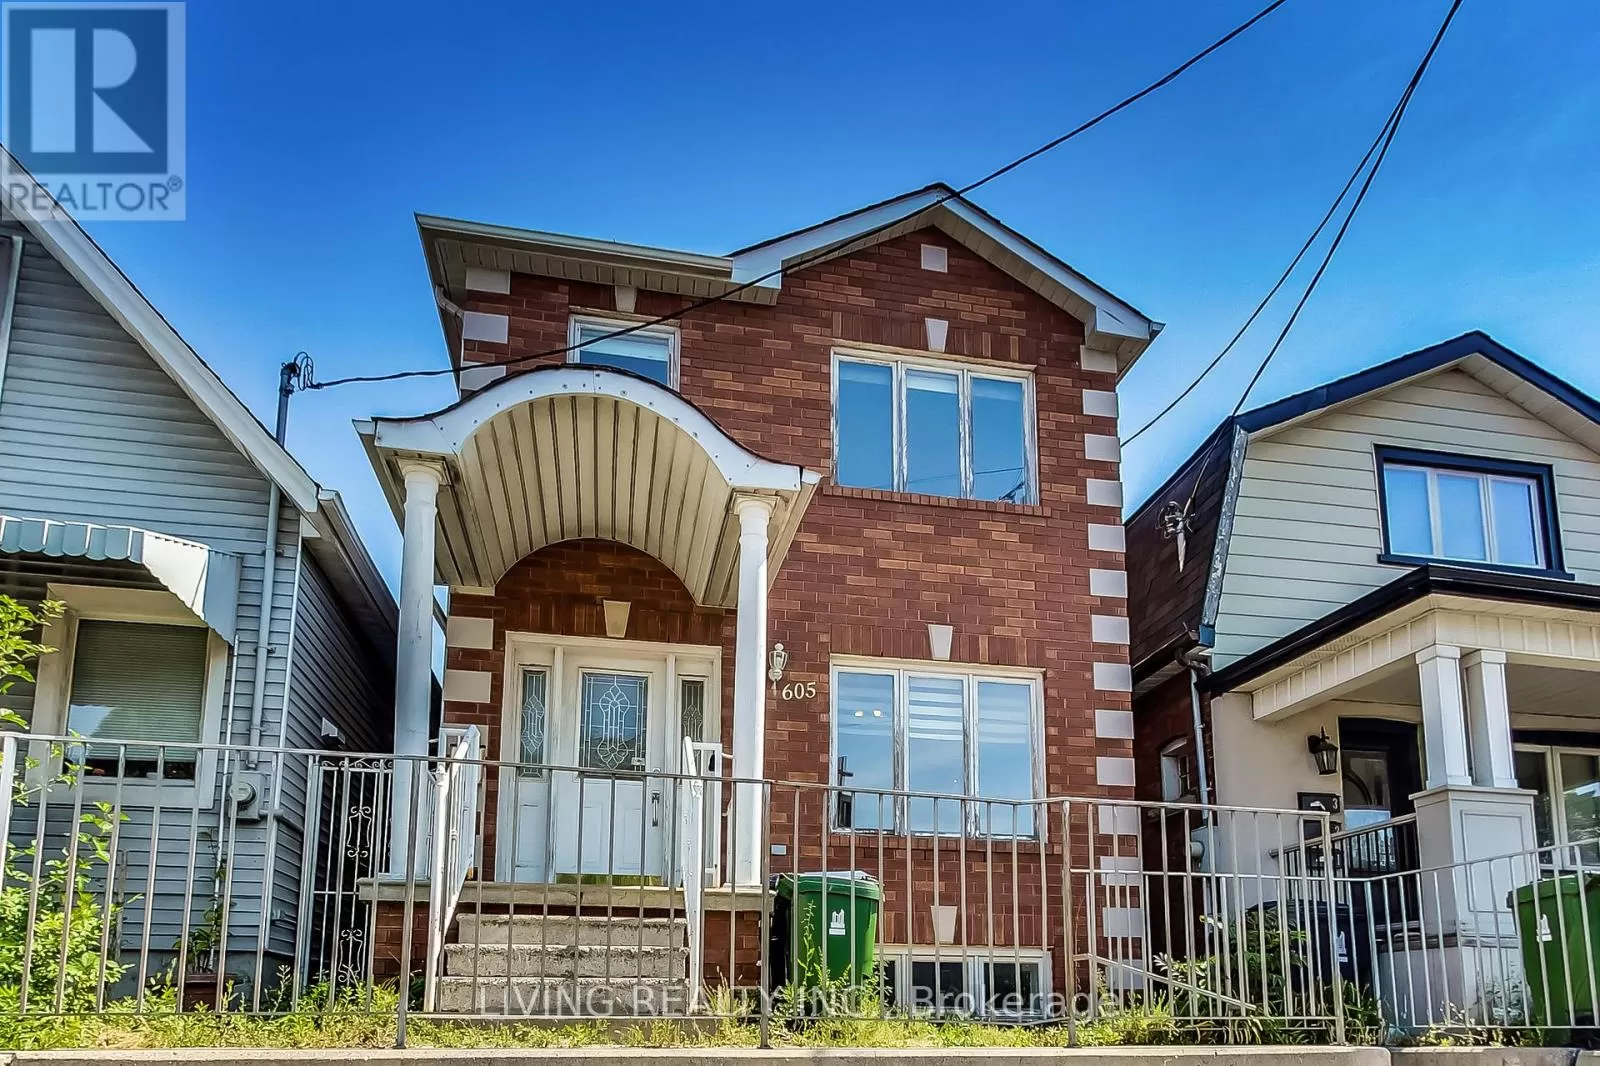 House for rent: 605 Jane Street, Toronto, Ontario M6S 4A3